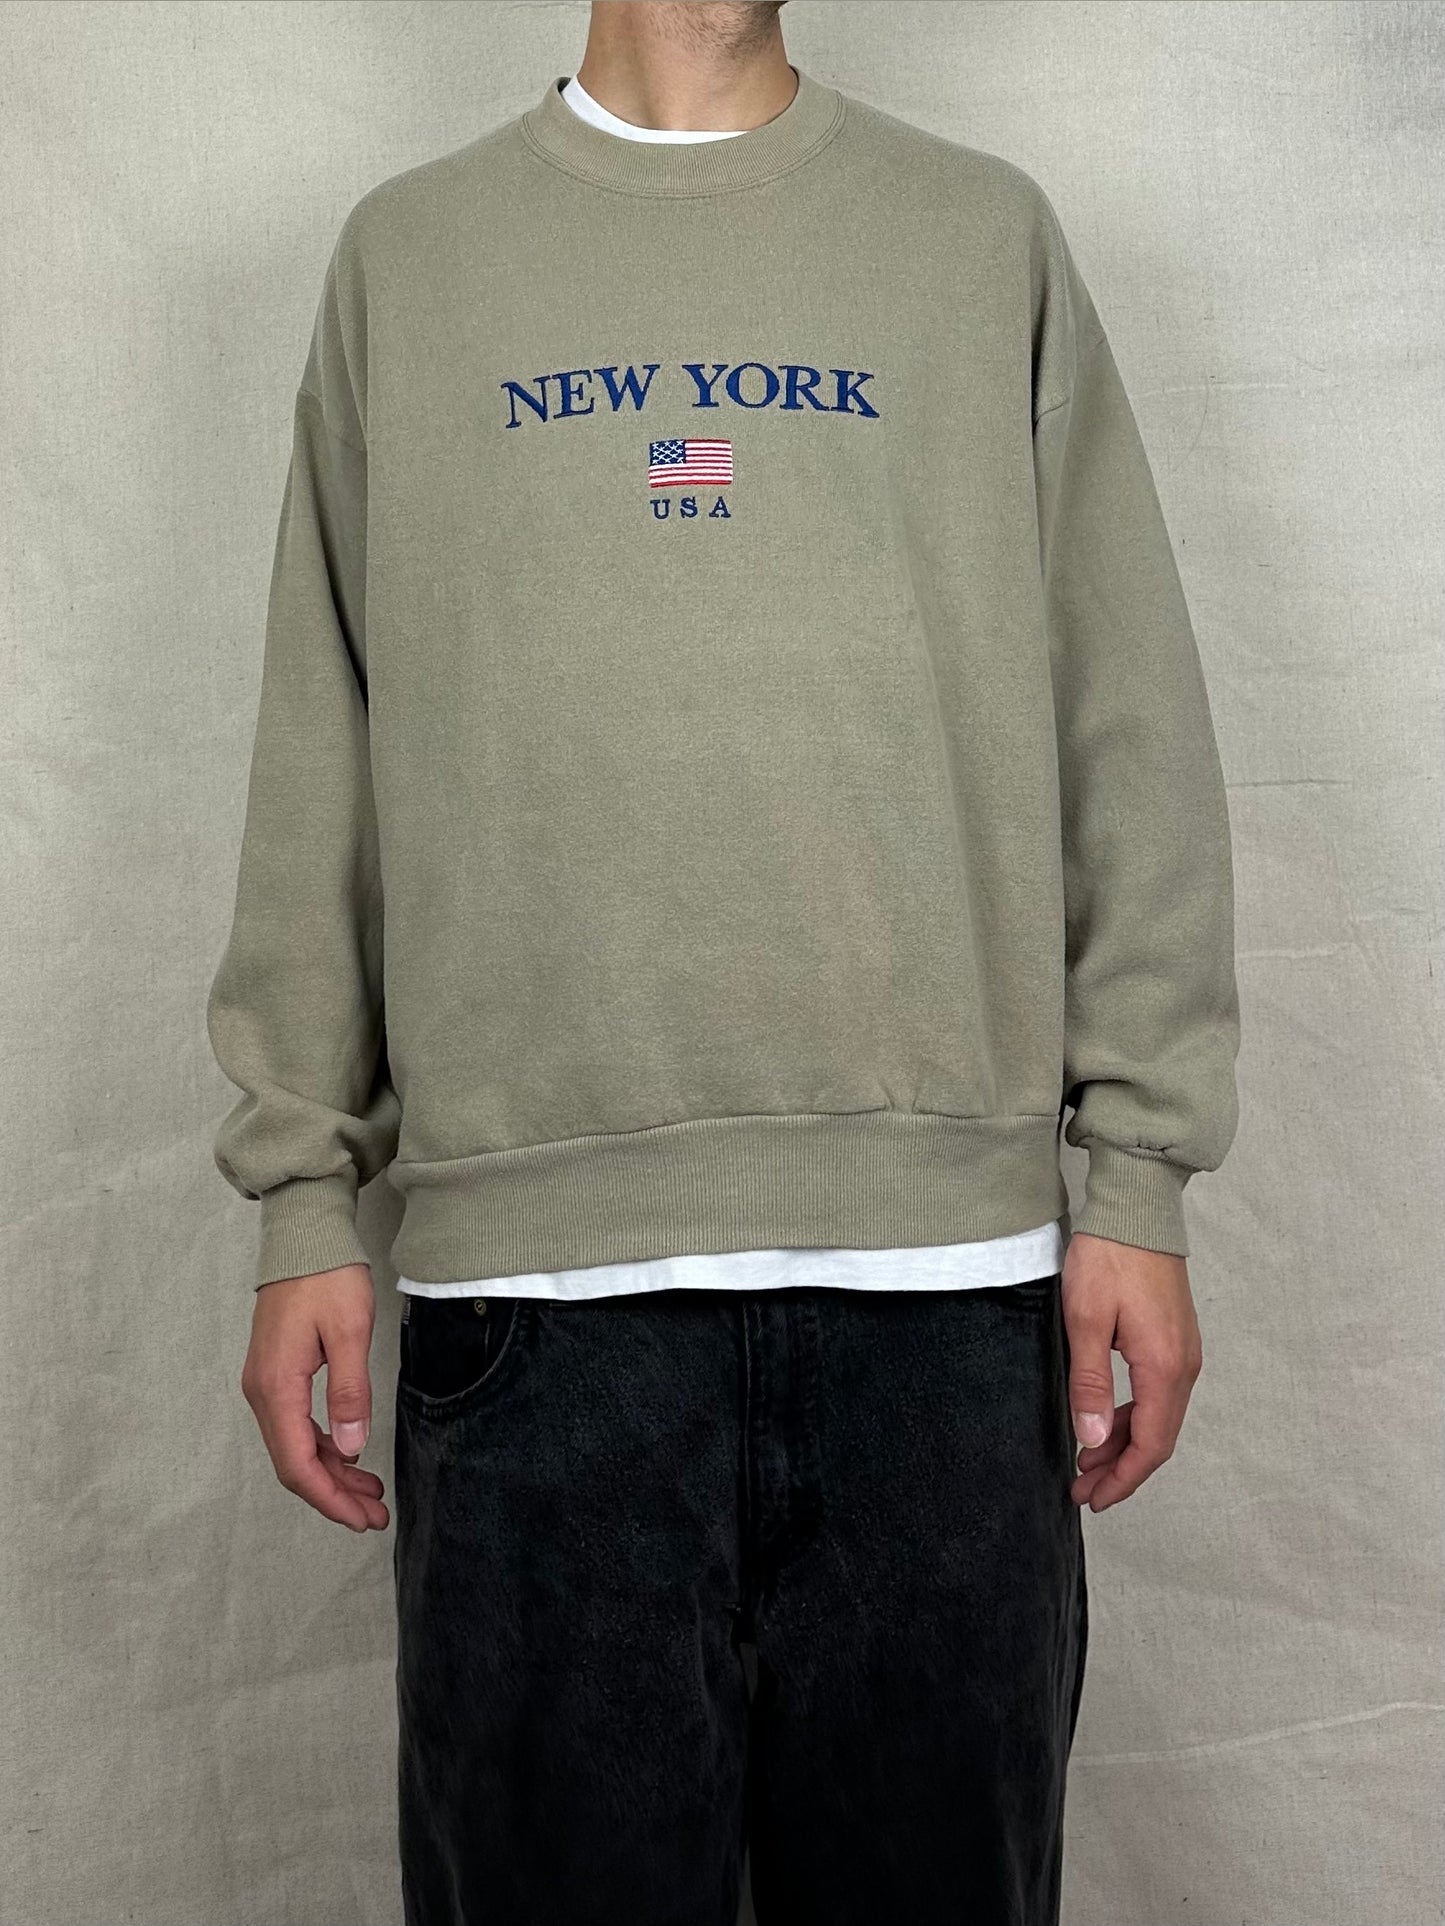 90's New York USA Embroidered Vintage Sweatshirt Size M-L